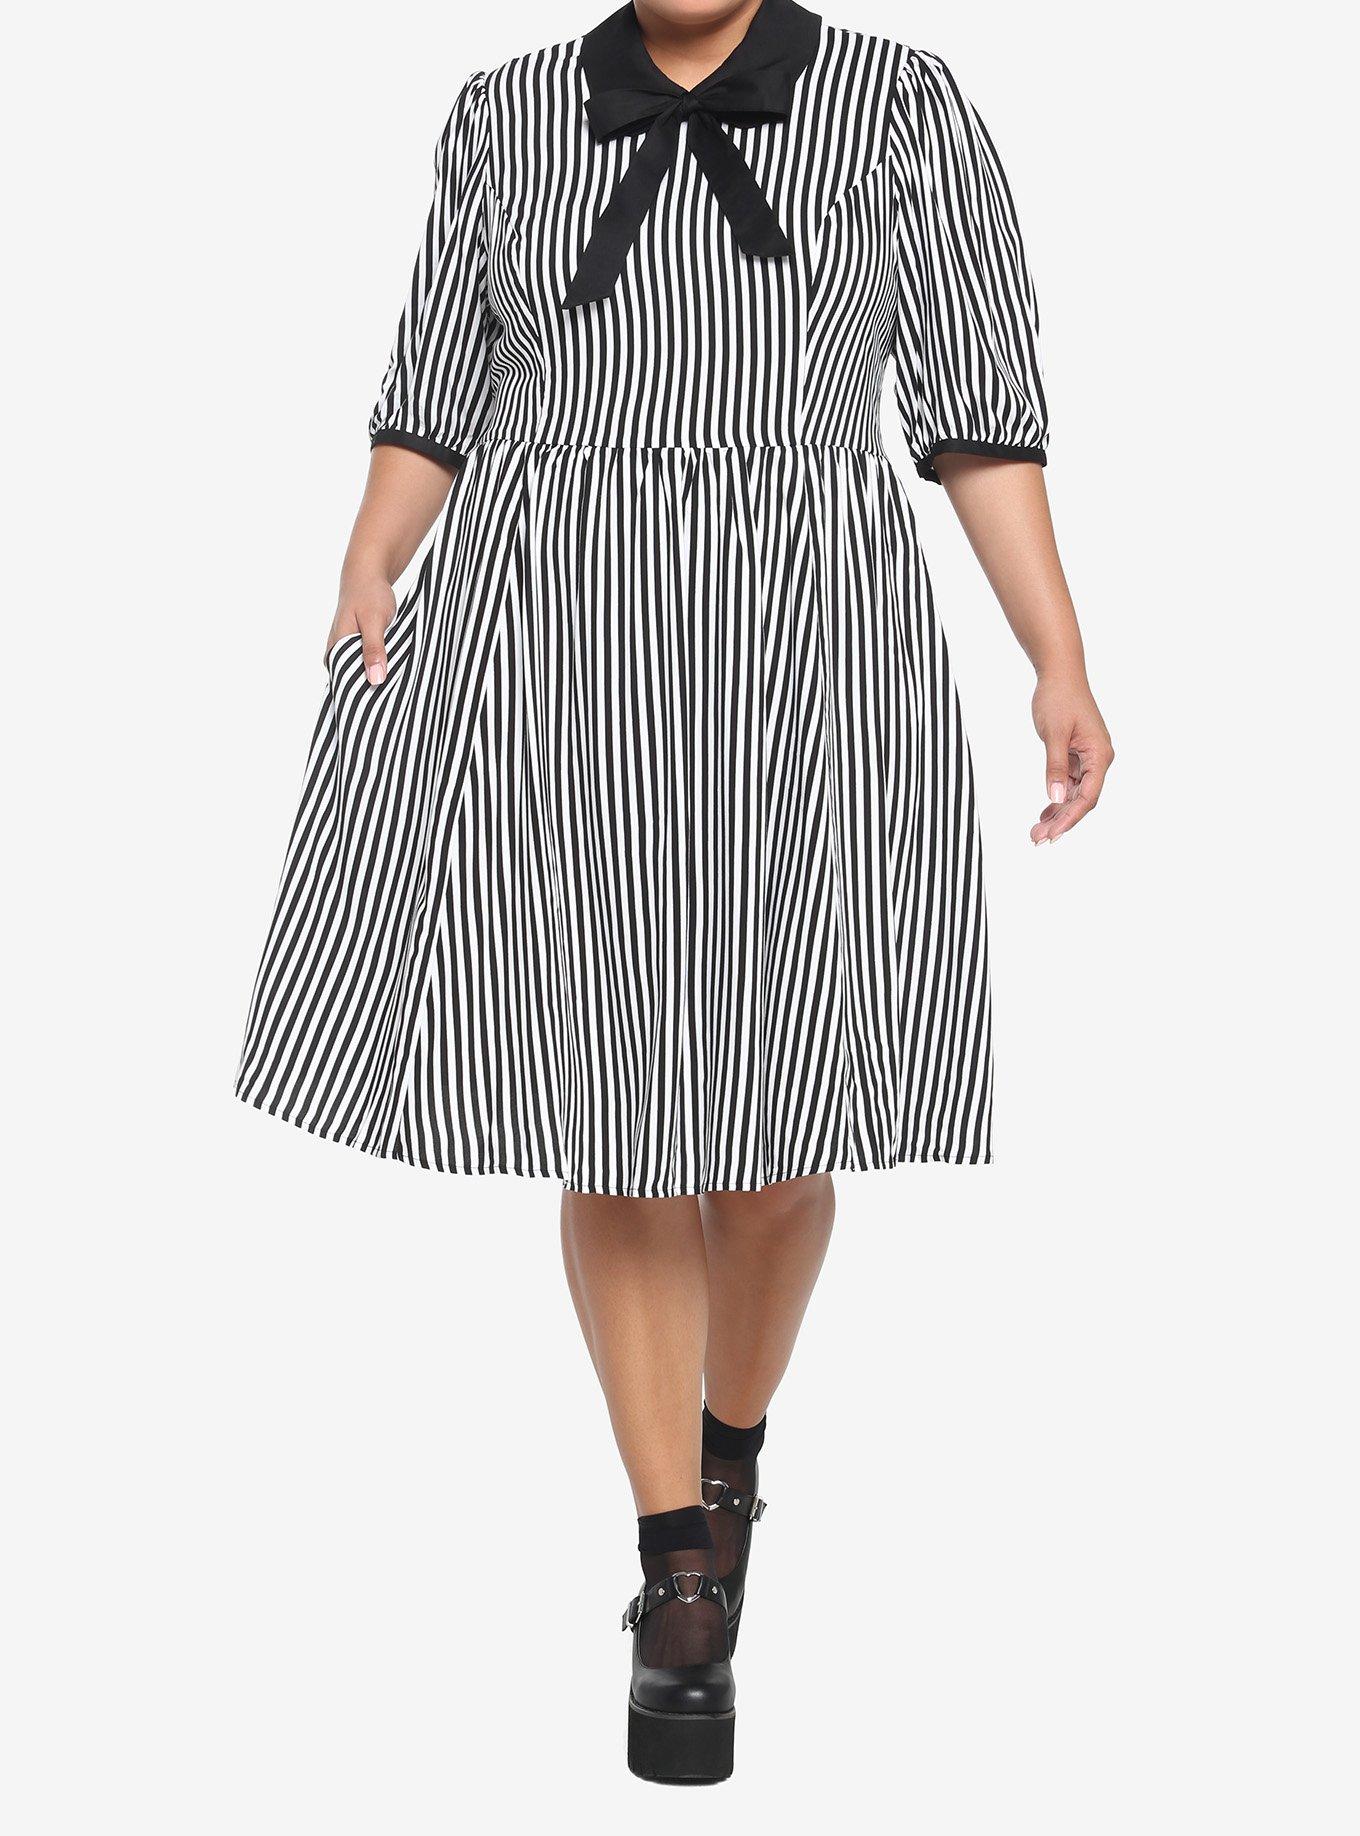 Black & White Stripe Bow Retro Dress Plus Size, STRIPE WHITE AND BLACK, alternate